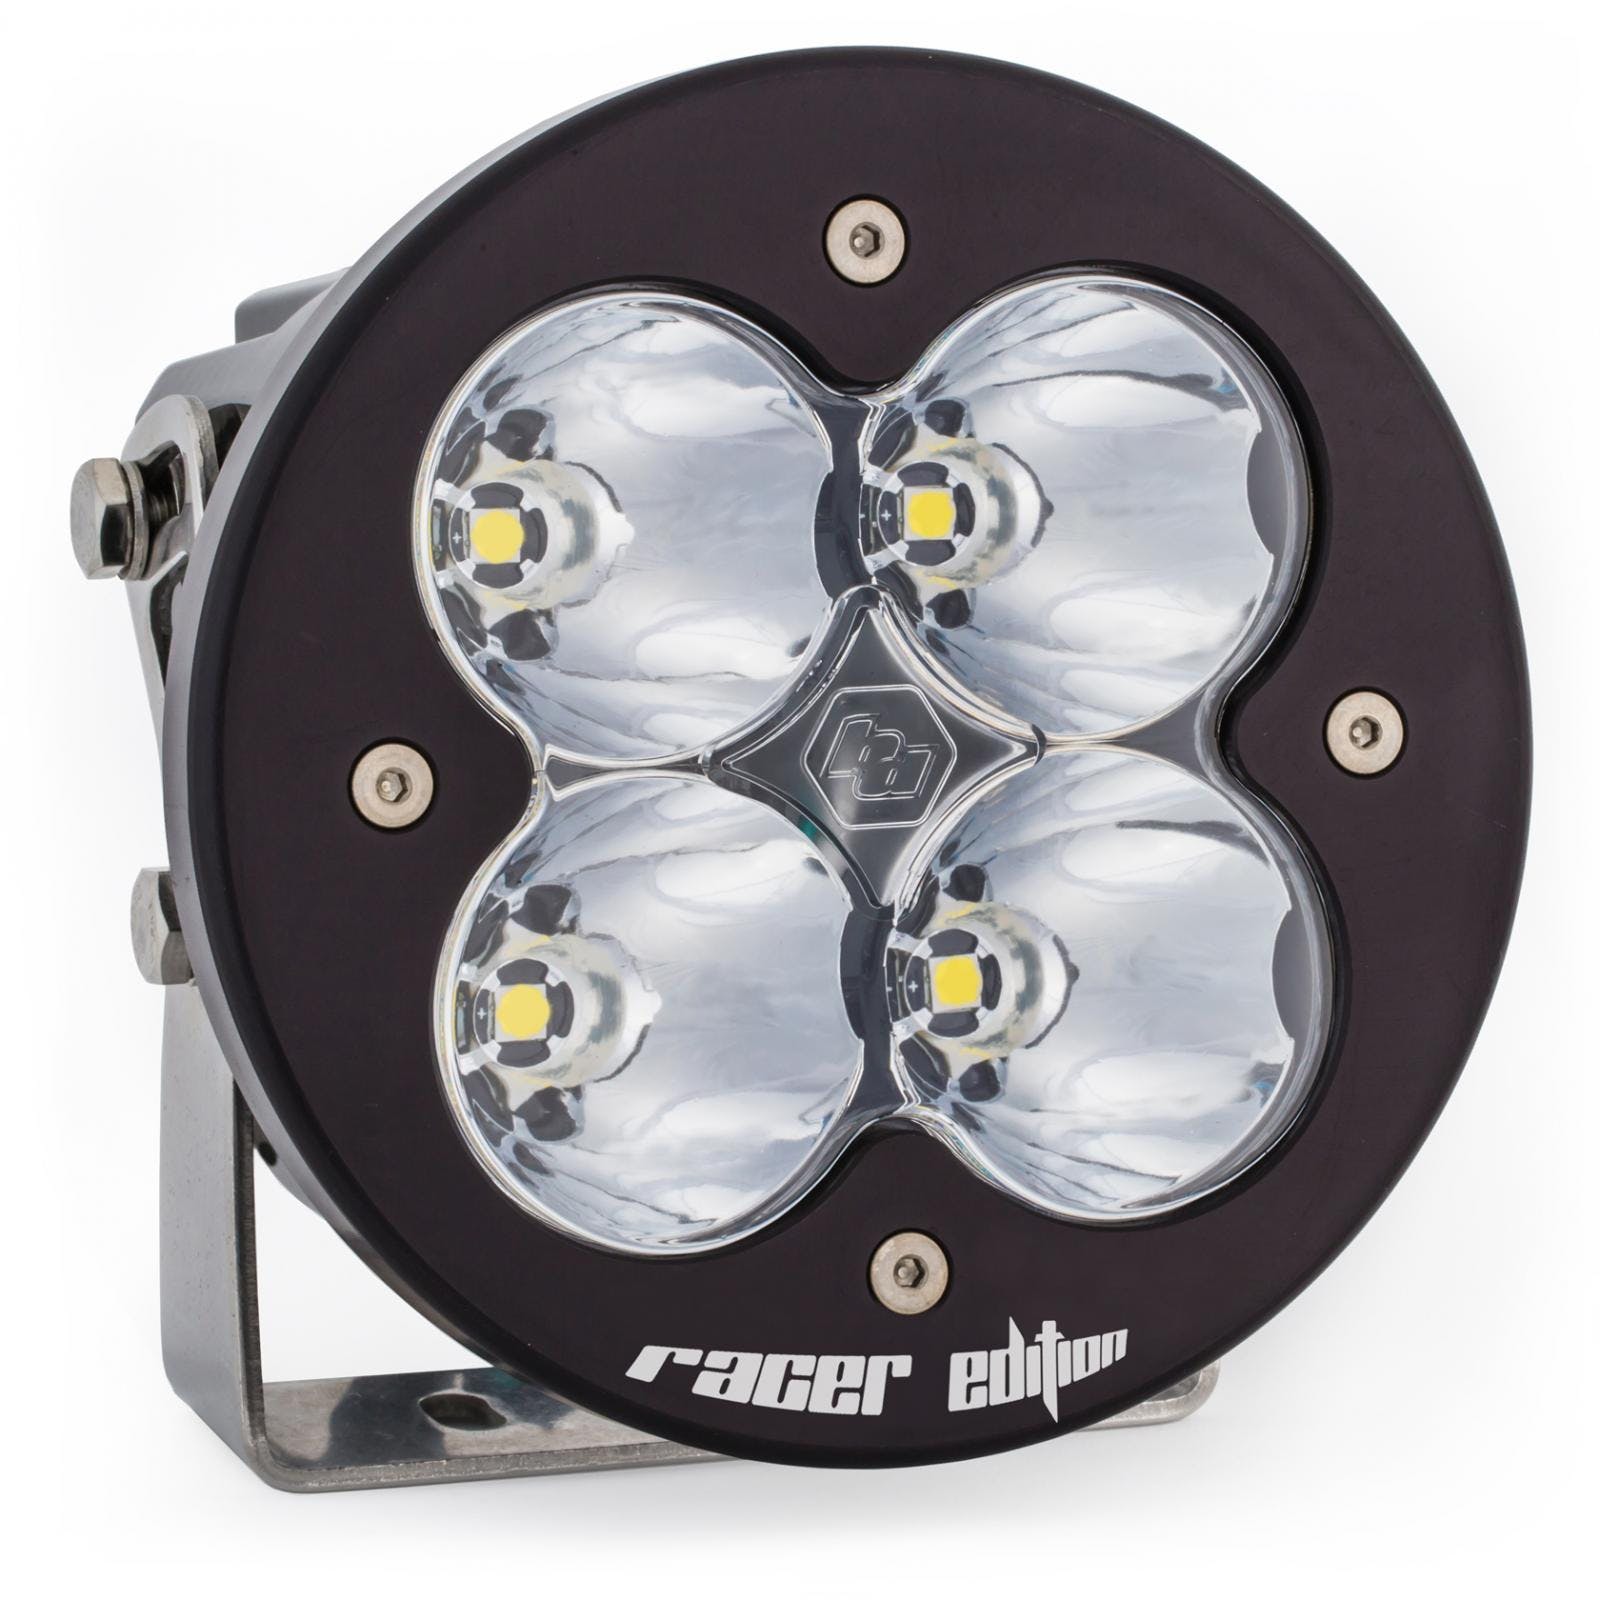 Baja Designs 690002 LED Light Pods Clear Lens Spot Each XL Racer Edition High Speed